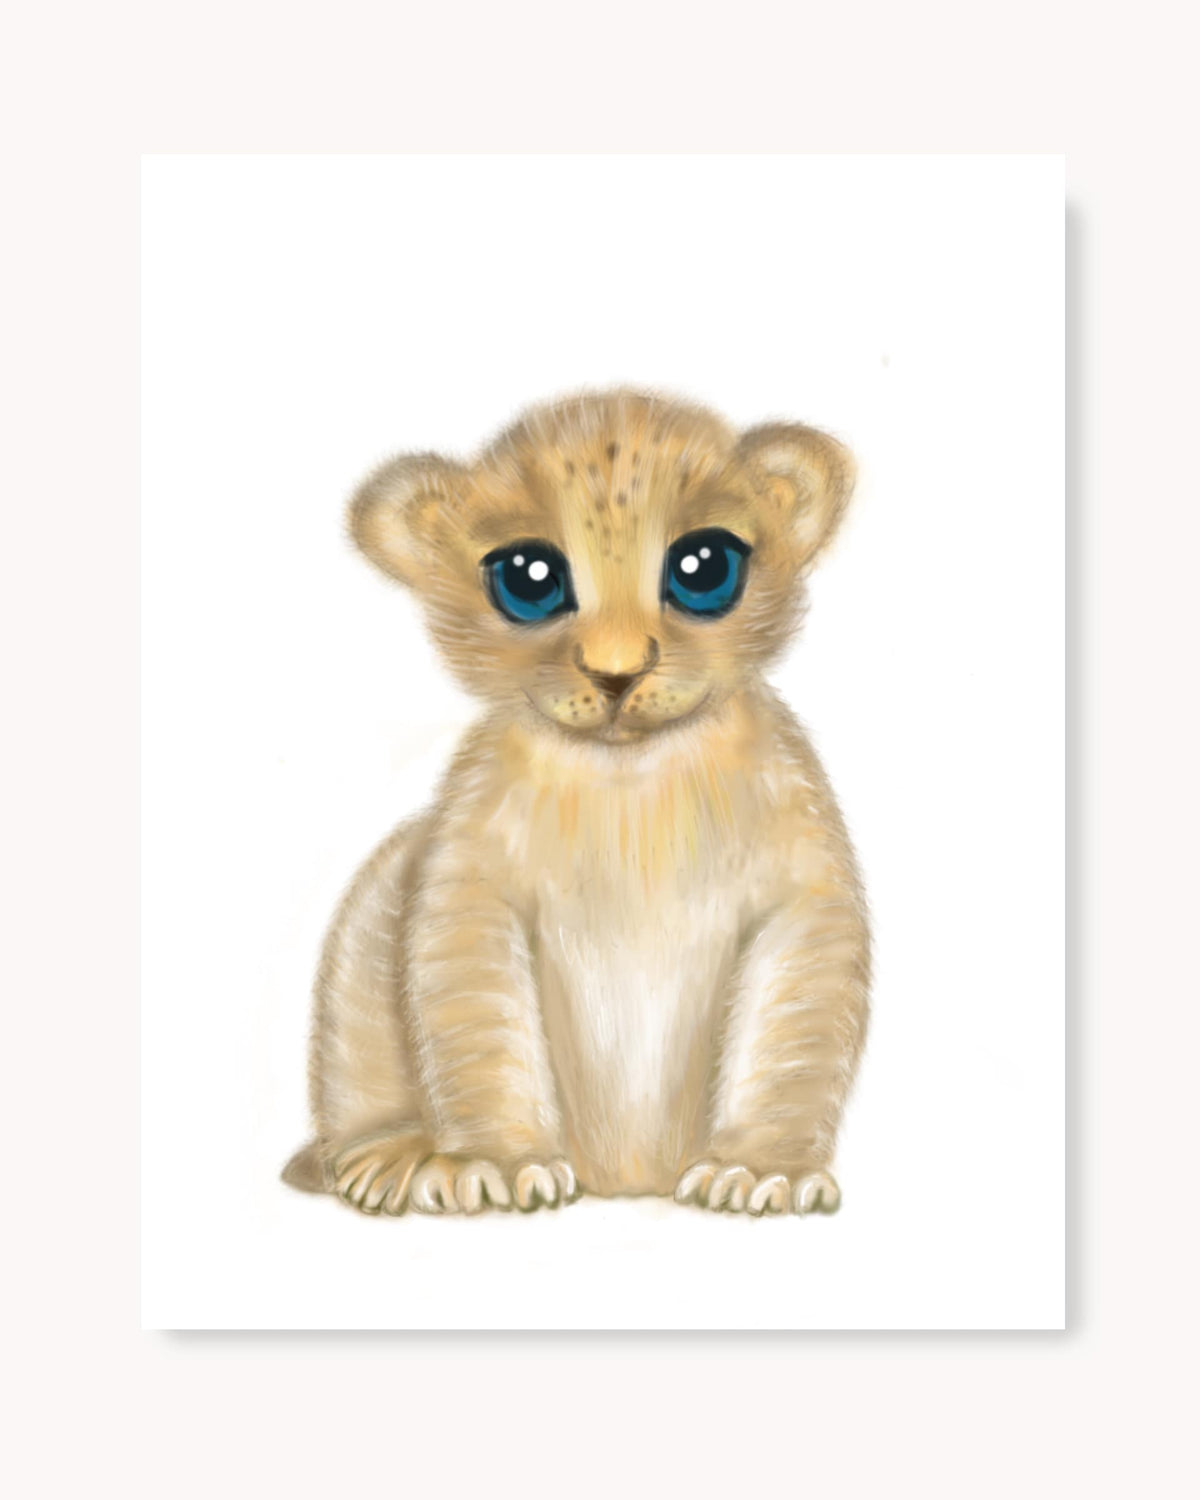 Hand drawn safari nursery decor wall art poster cute lion cub baby animal 